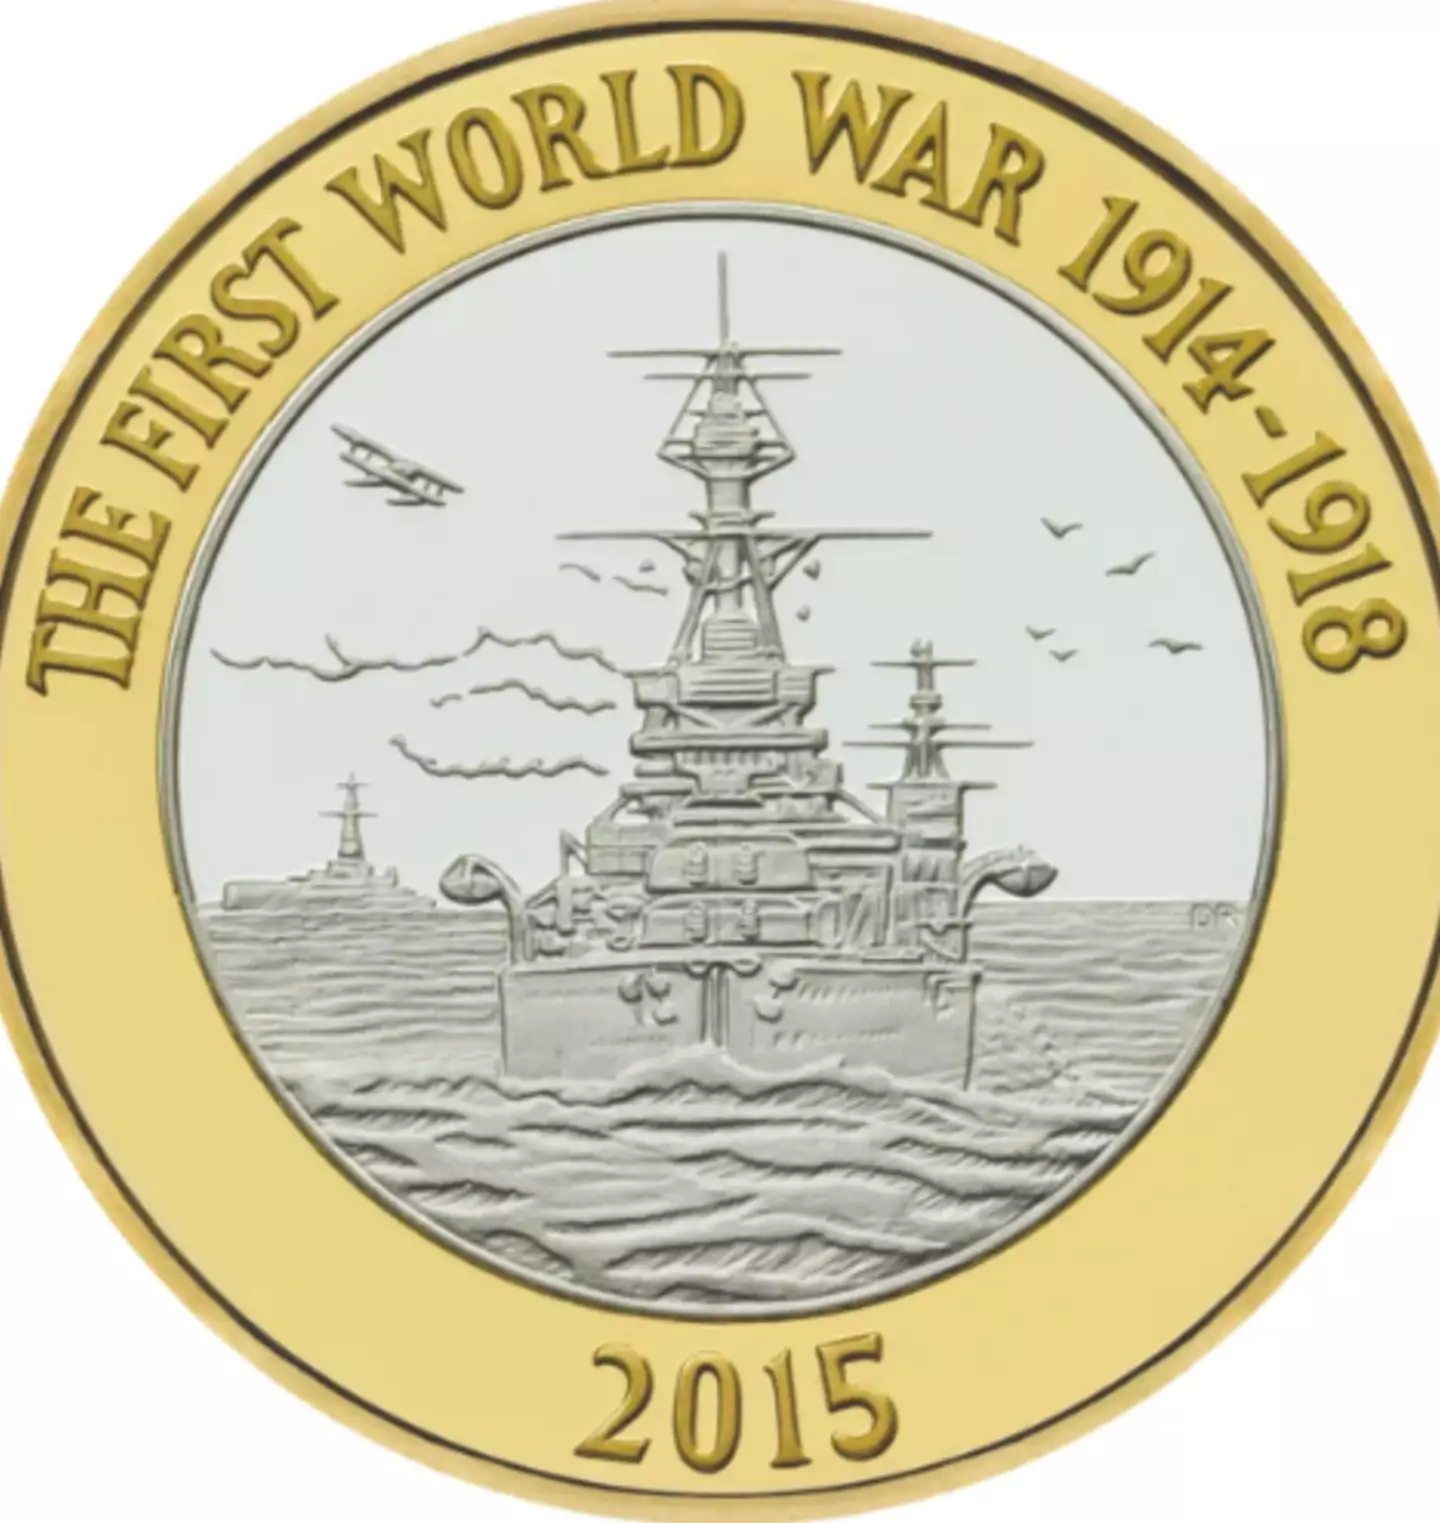 The £2 navy coin is already very rare.